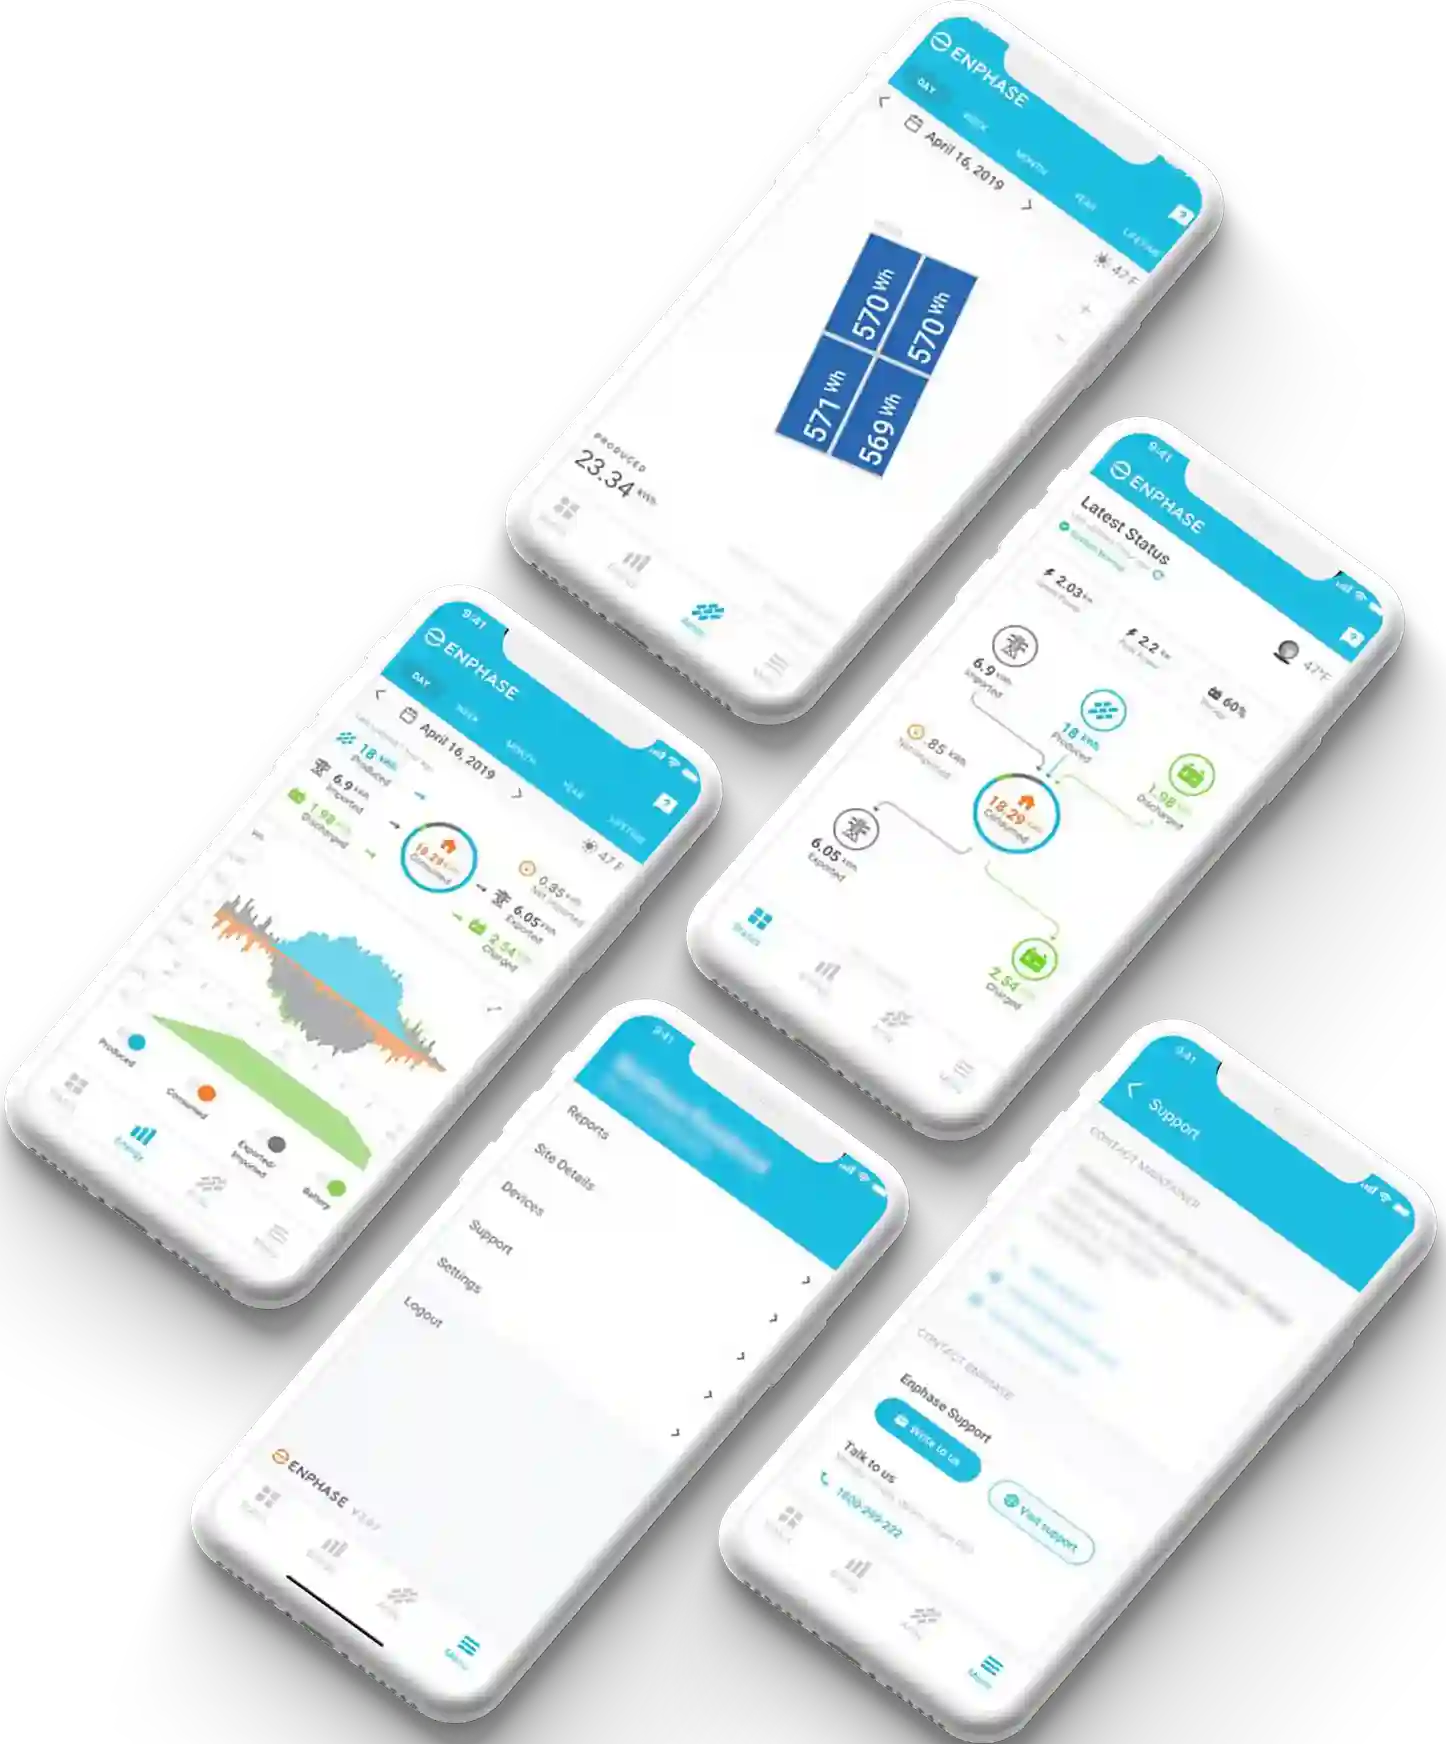 mobile Application to track solar energy savings and usage